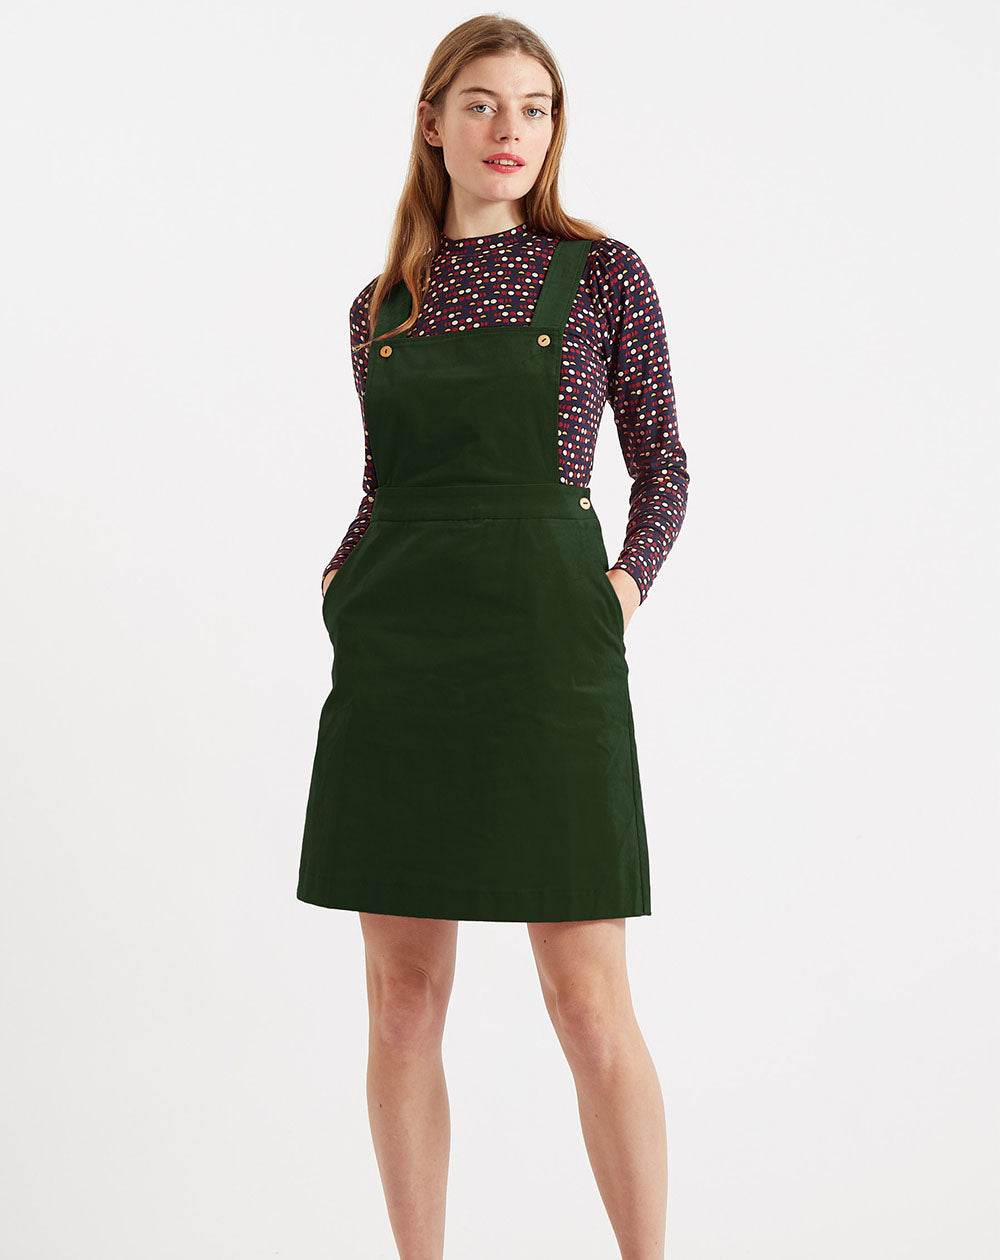 Louche - Sofya Mini Dress - Forest Green Babycord